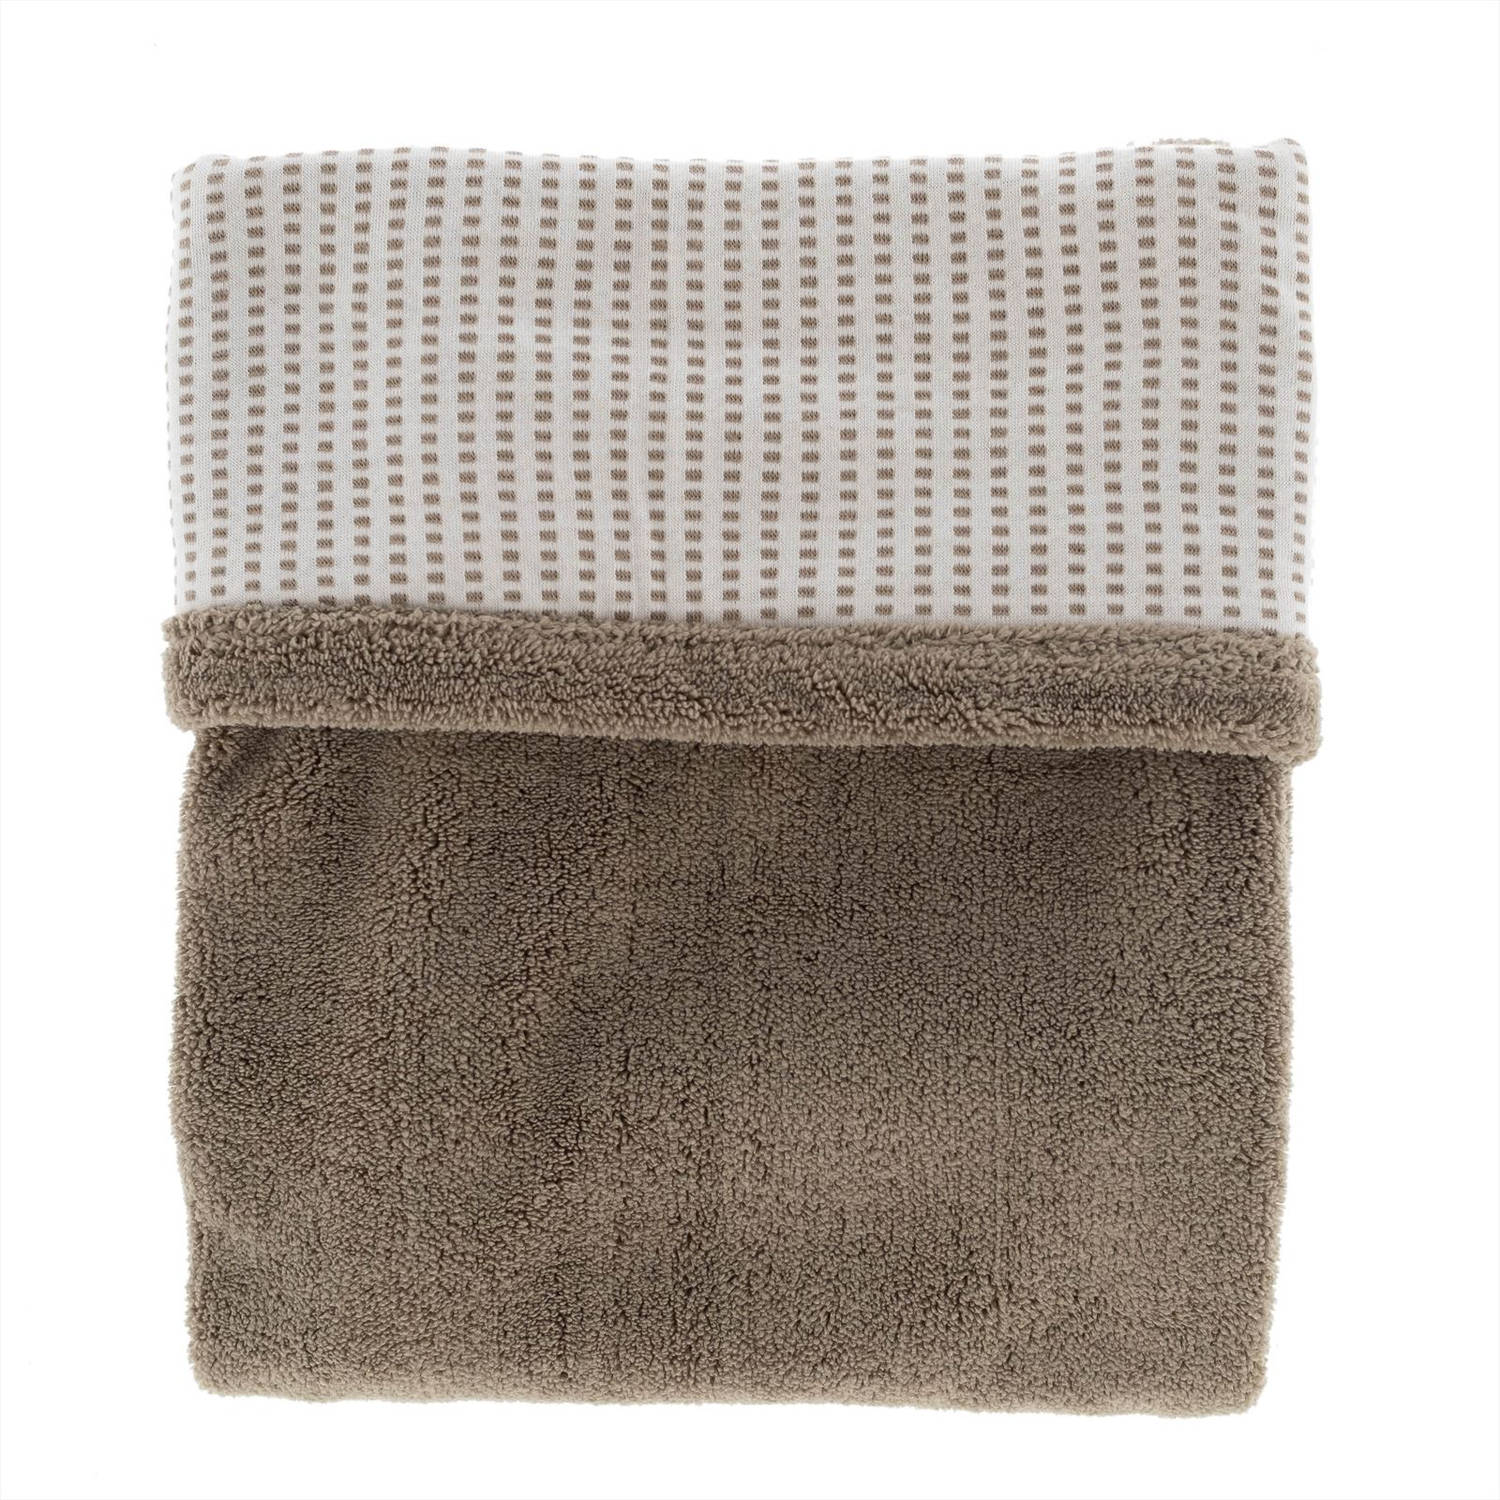 Snoozebaby Organic Blanket Cot T.o.g. 2.0 Warm Brown 100x150cm